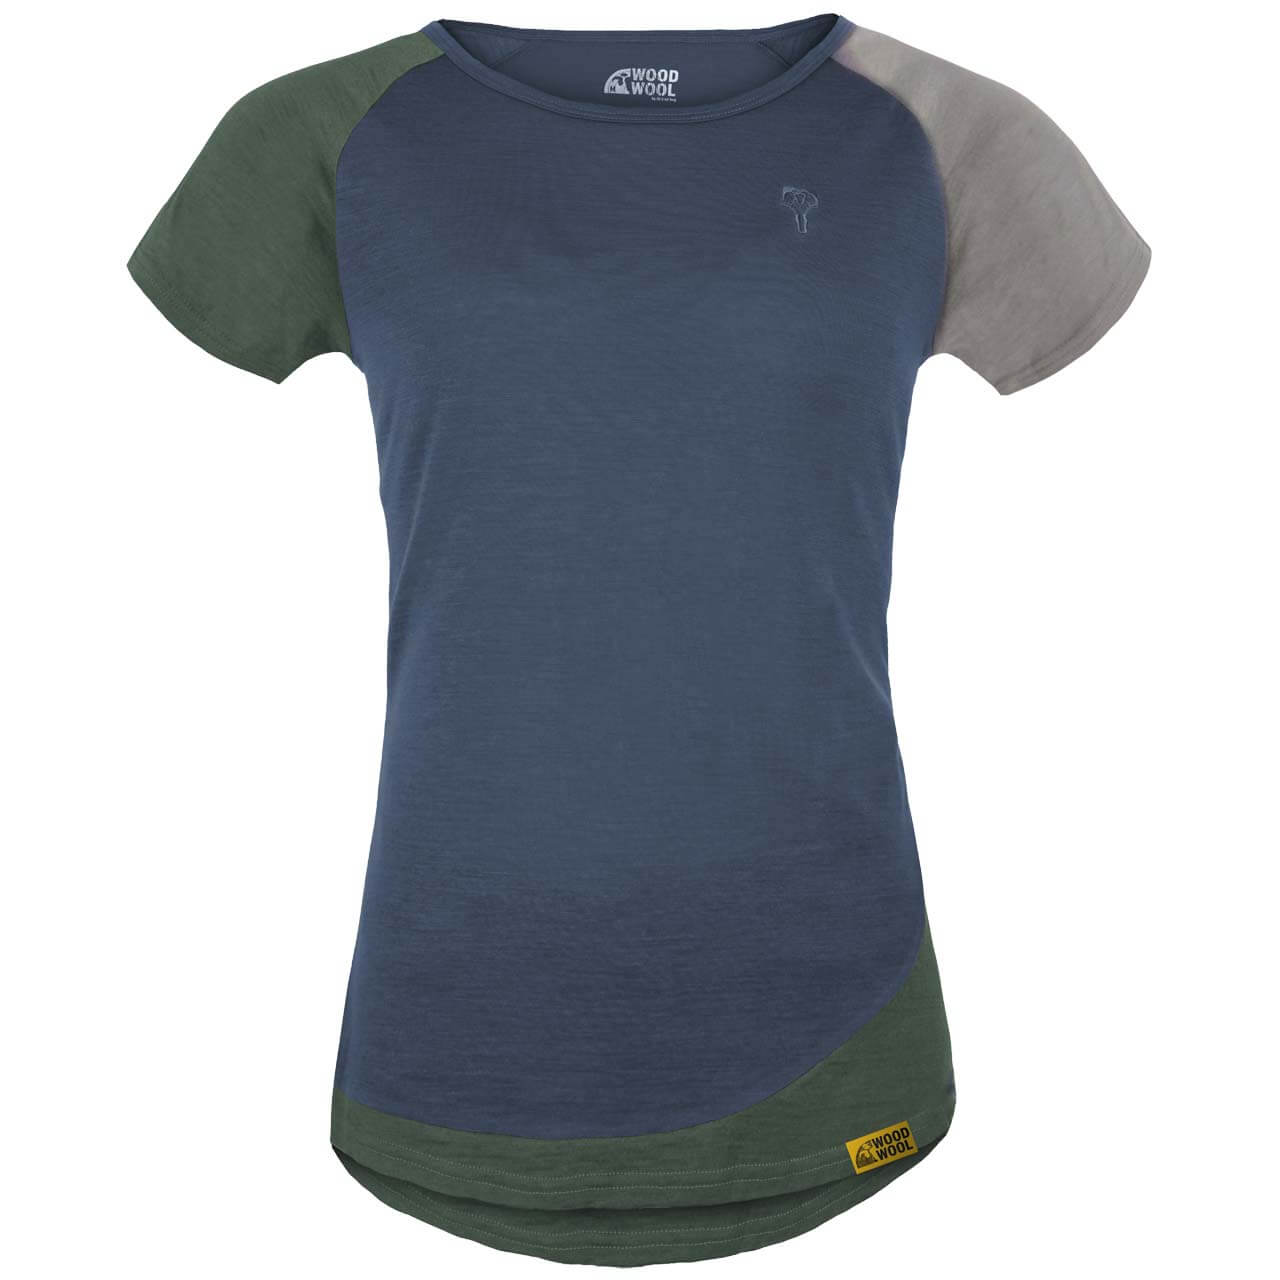 Grüezi Bag WoodWool Janeway T-Shirt - Ocean Cavern, L von Grüezi Bag}